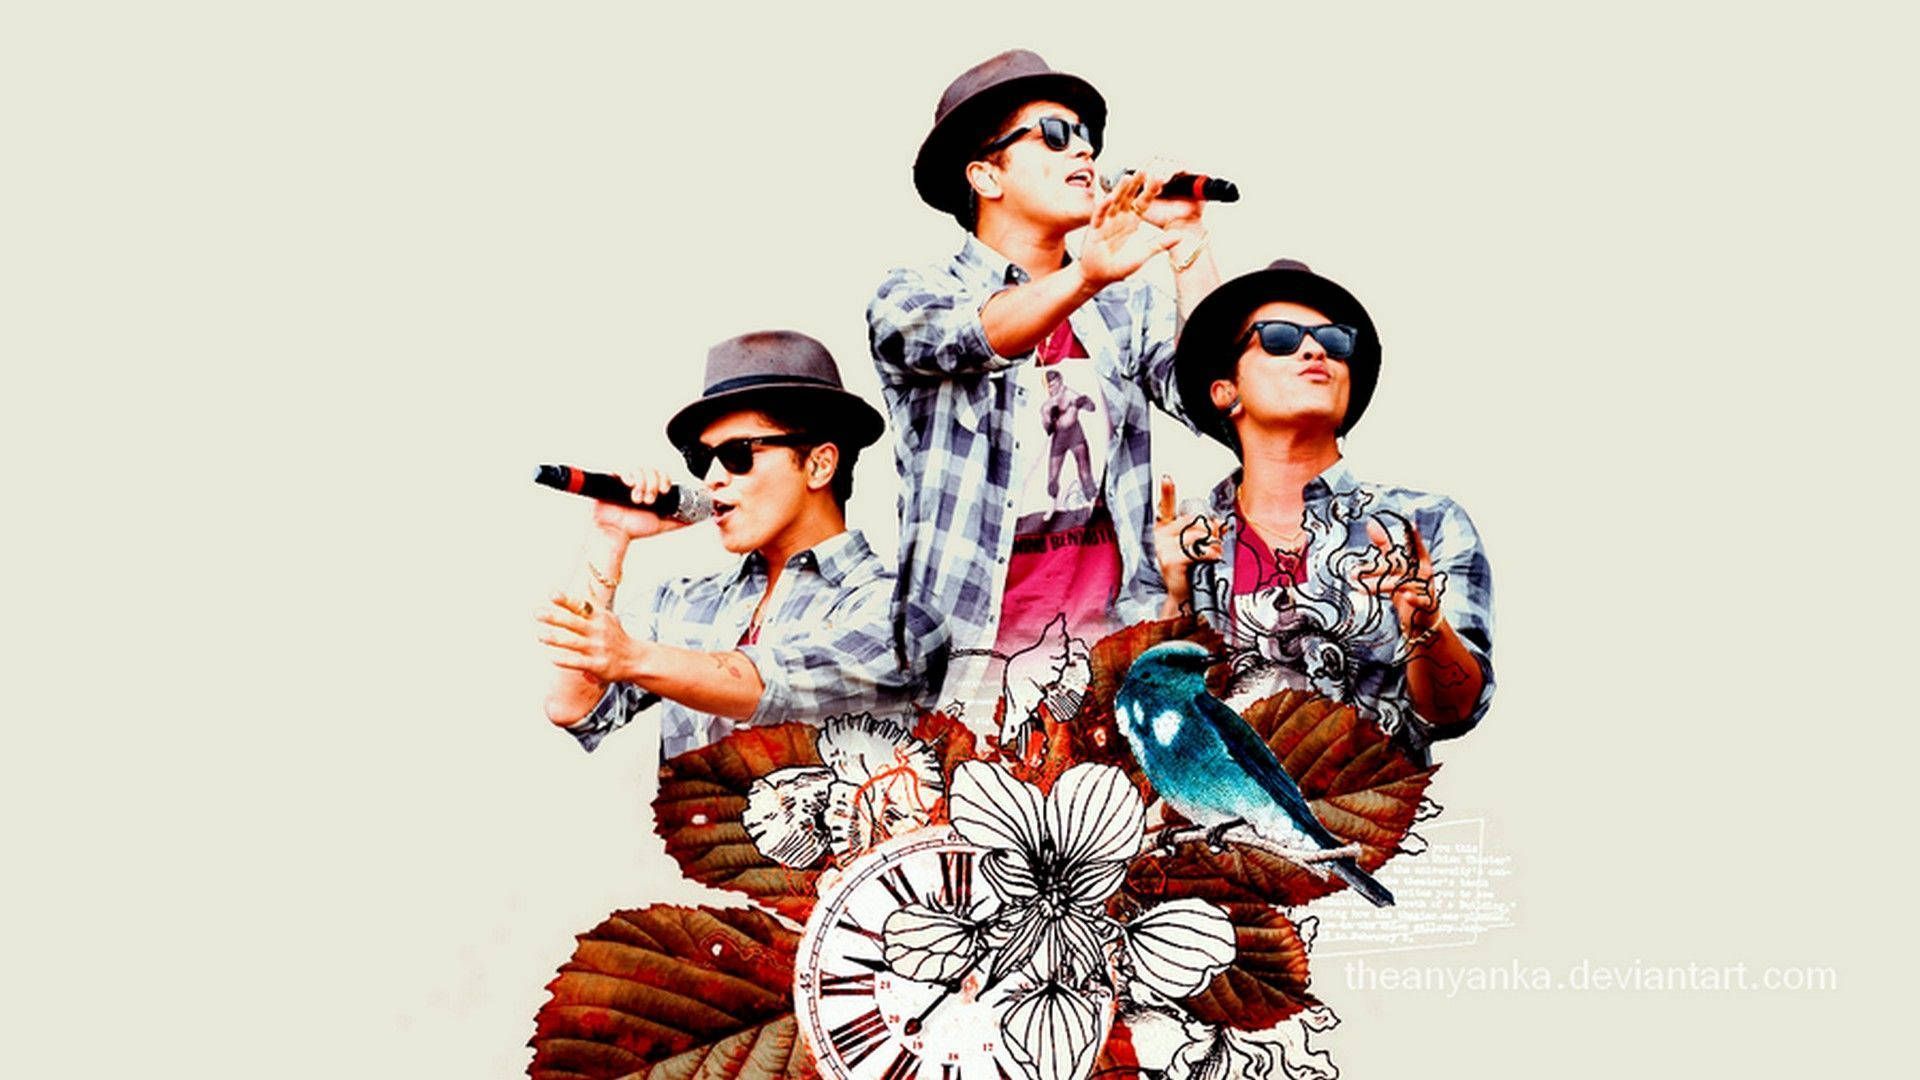 Free Bruno Mars Wallpaper Downloads, Bruno Mars Wallpaper for FREE